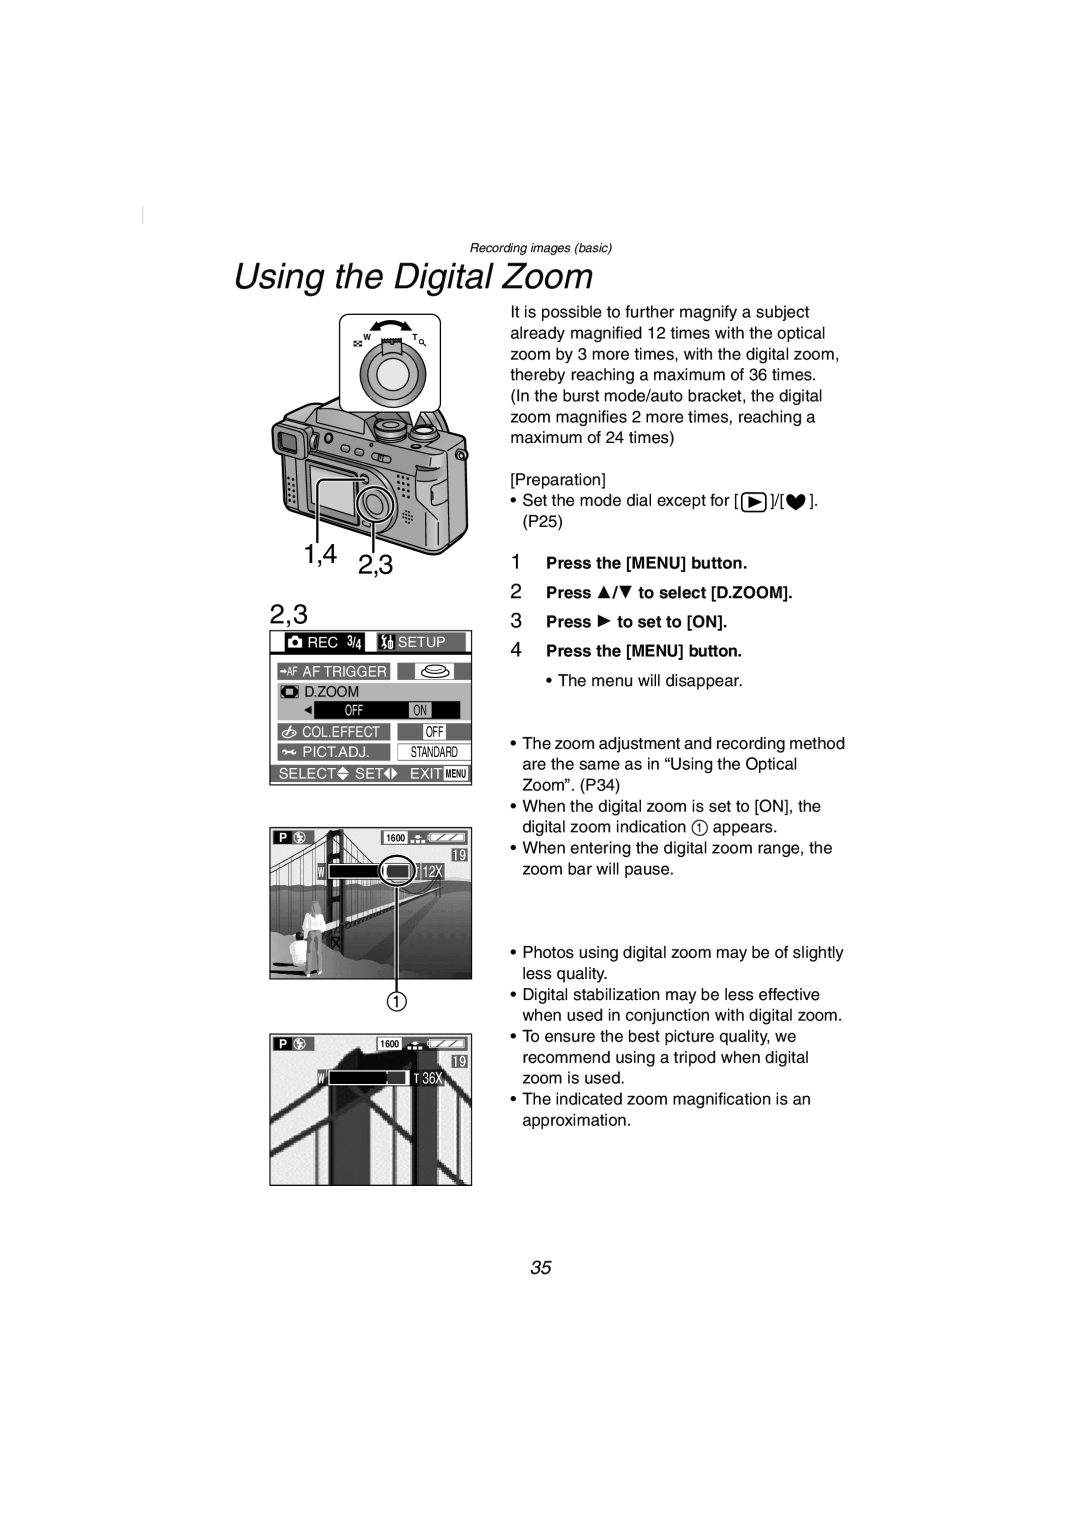 Panasonic DMC-FZ2PP Using the Digital Zoom, 1,4 2,3, Press the MENU button 2 Press 3/4 to select D.ZOOM 